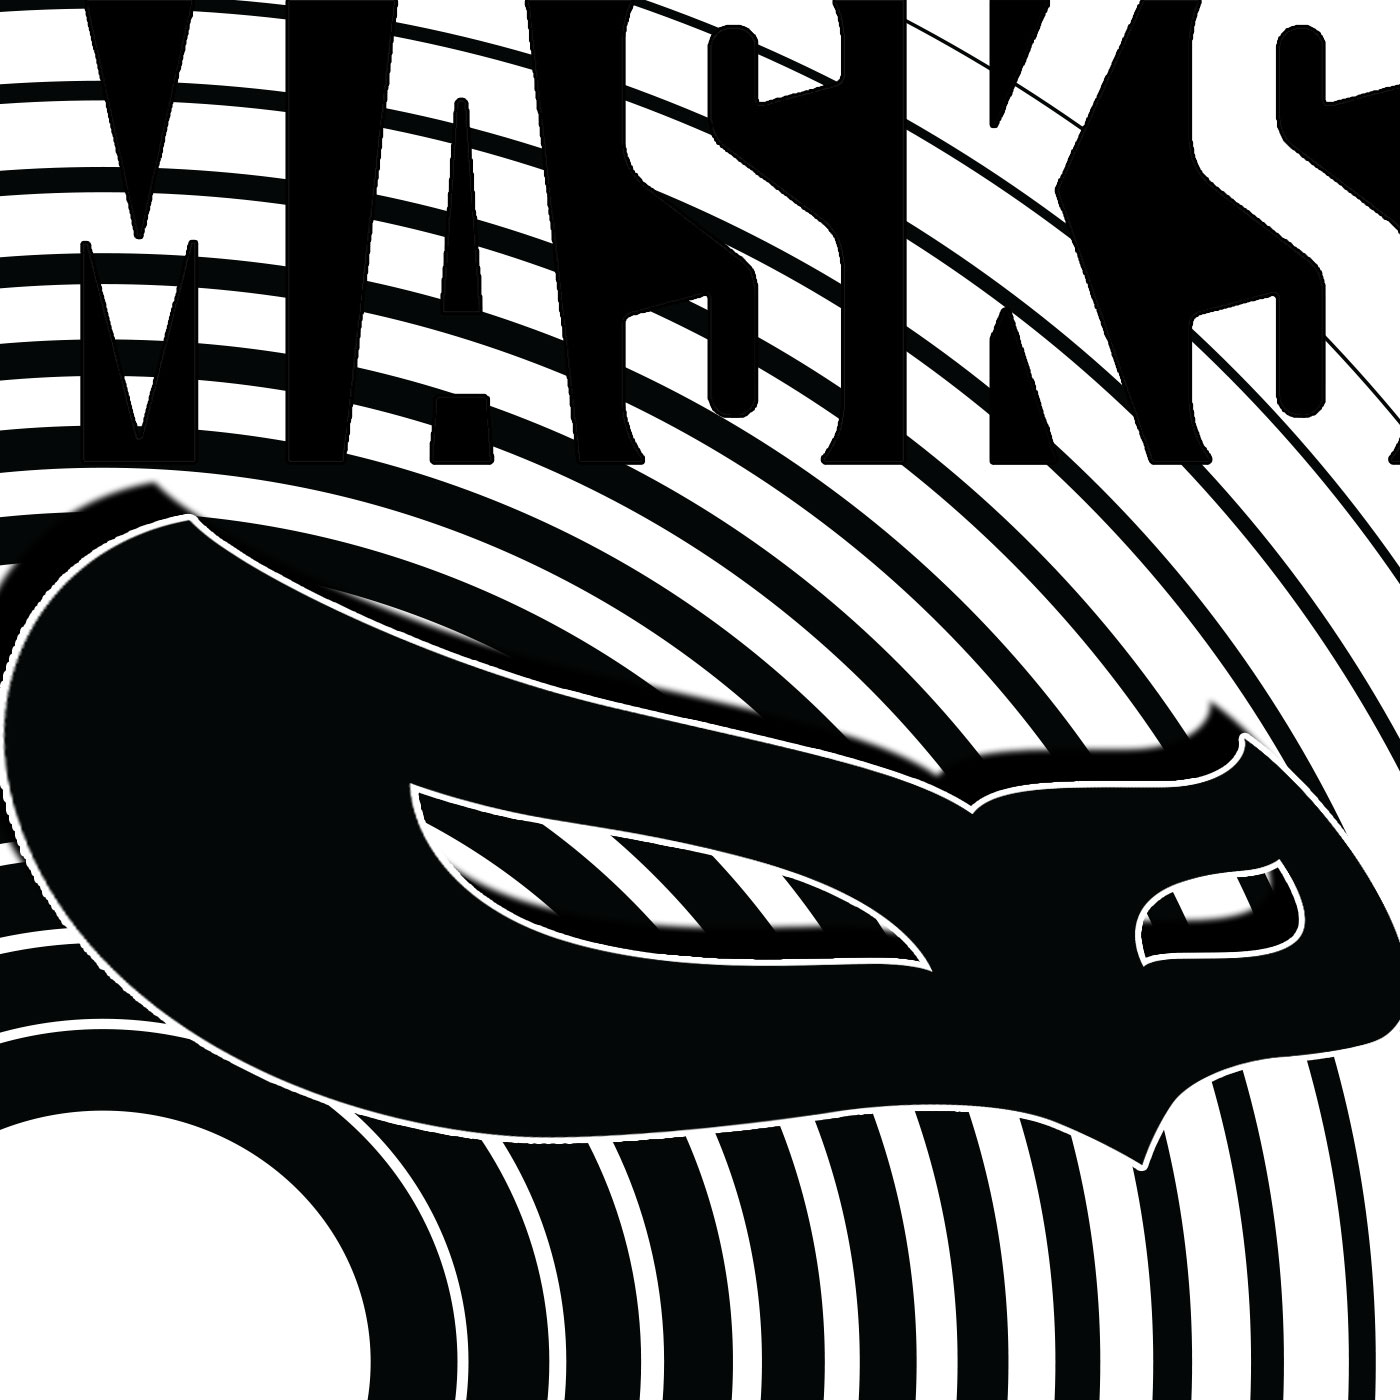 Masks-3-Titlecard-no-logo.jpg